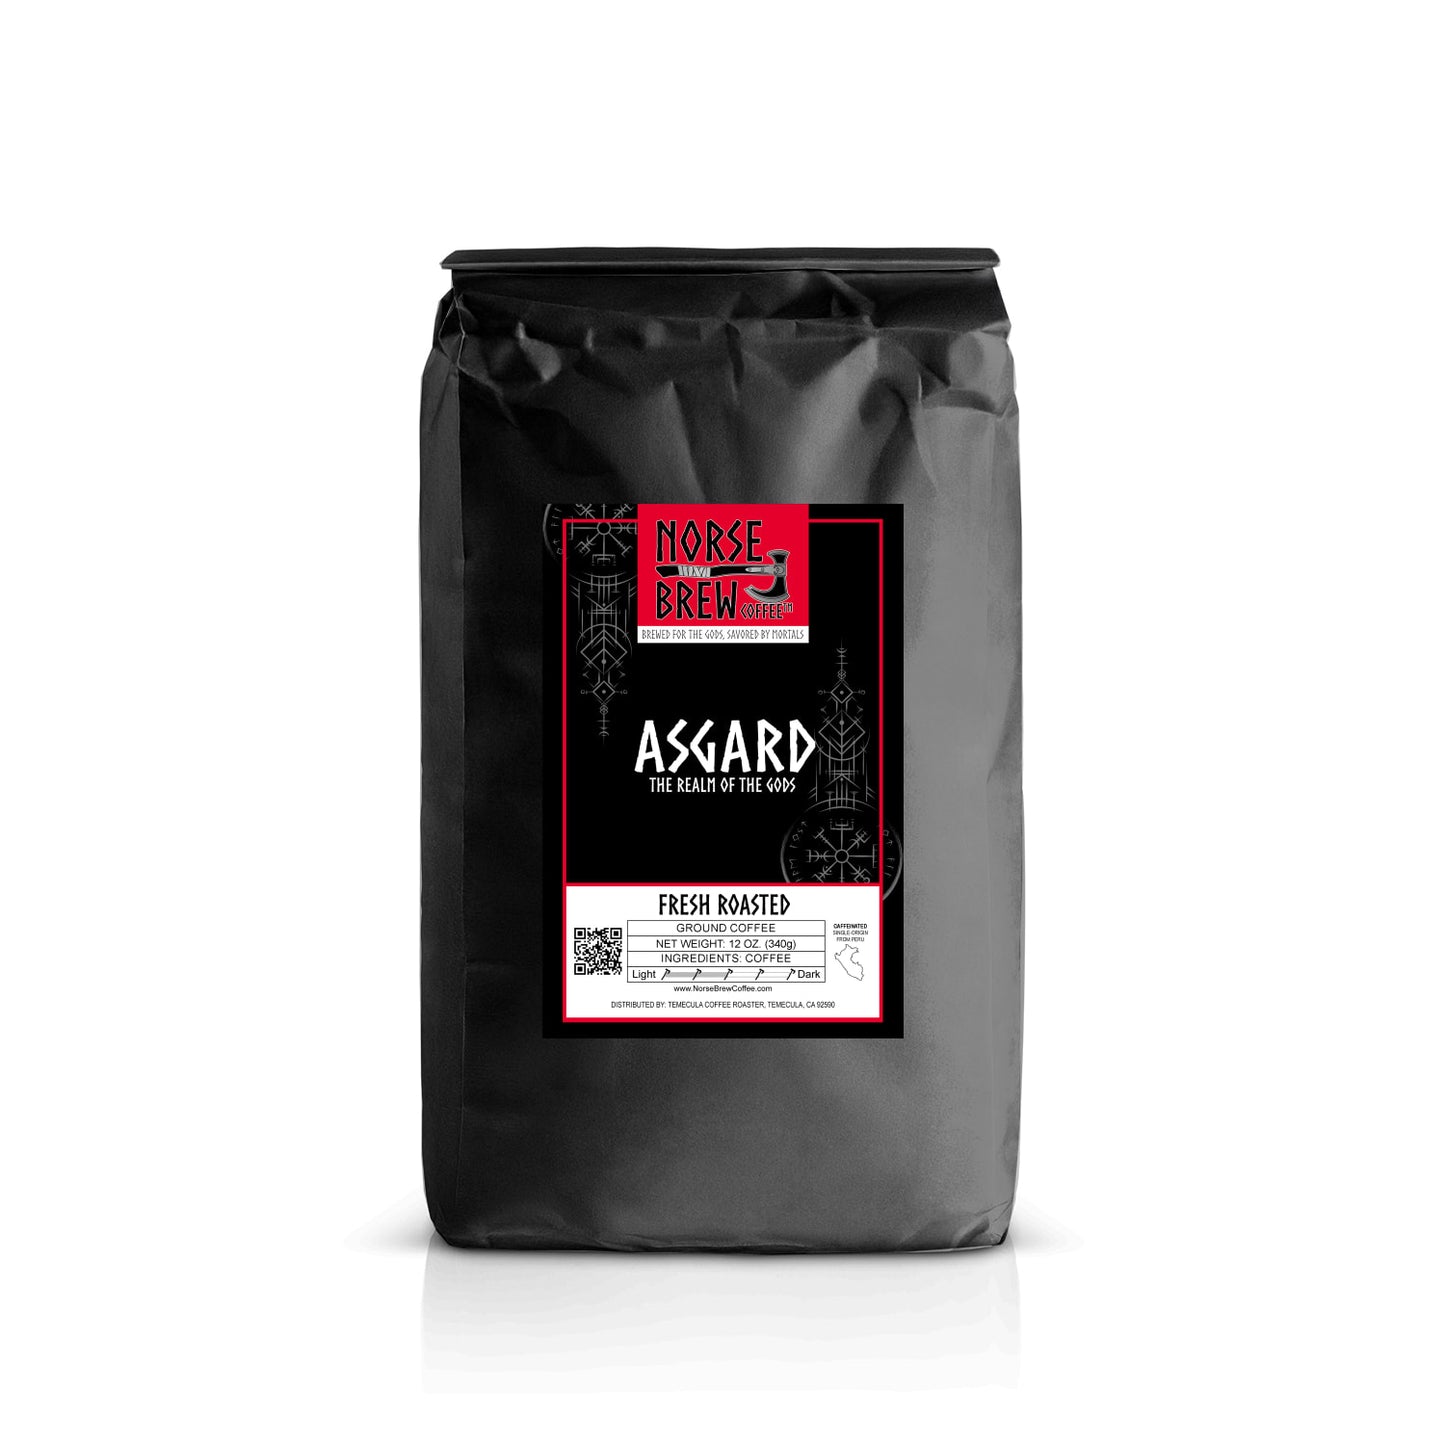 12oz Bag of Asgard Medium Roast Whole Bean Coffee Sourced from Piura, Peru